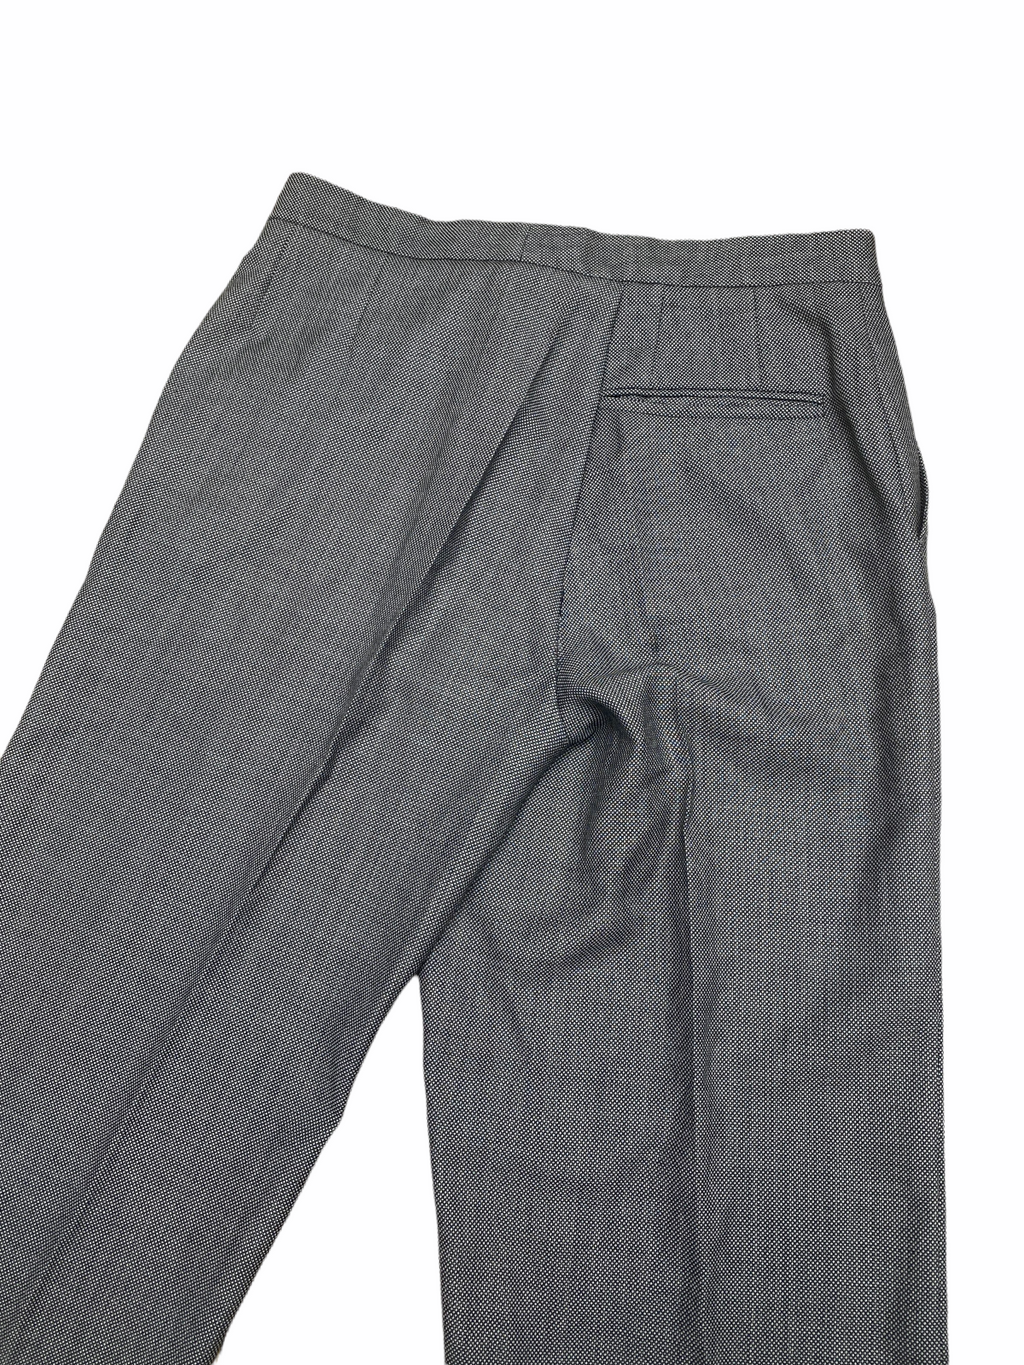 FW 2000 Grey Destructured Pants